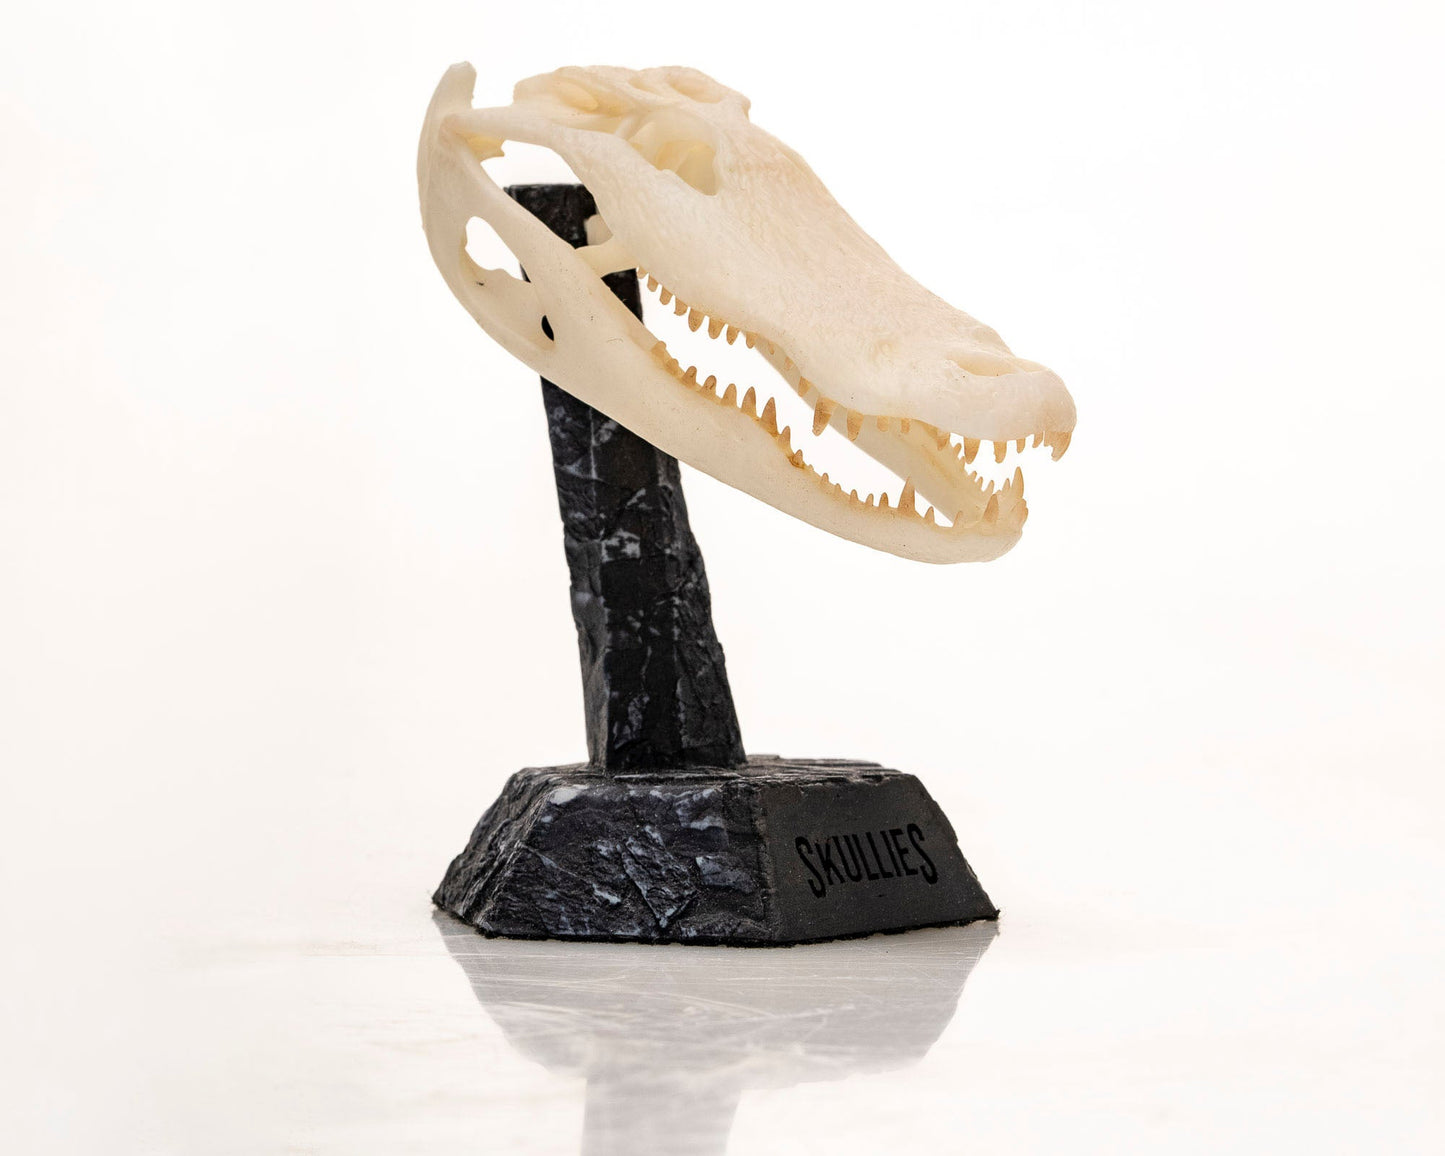 Resin Skullies - Miniature Replica Alligator Skull